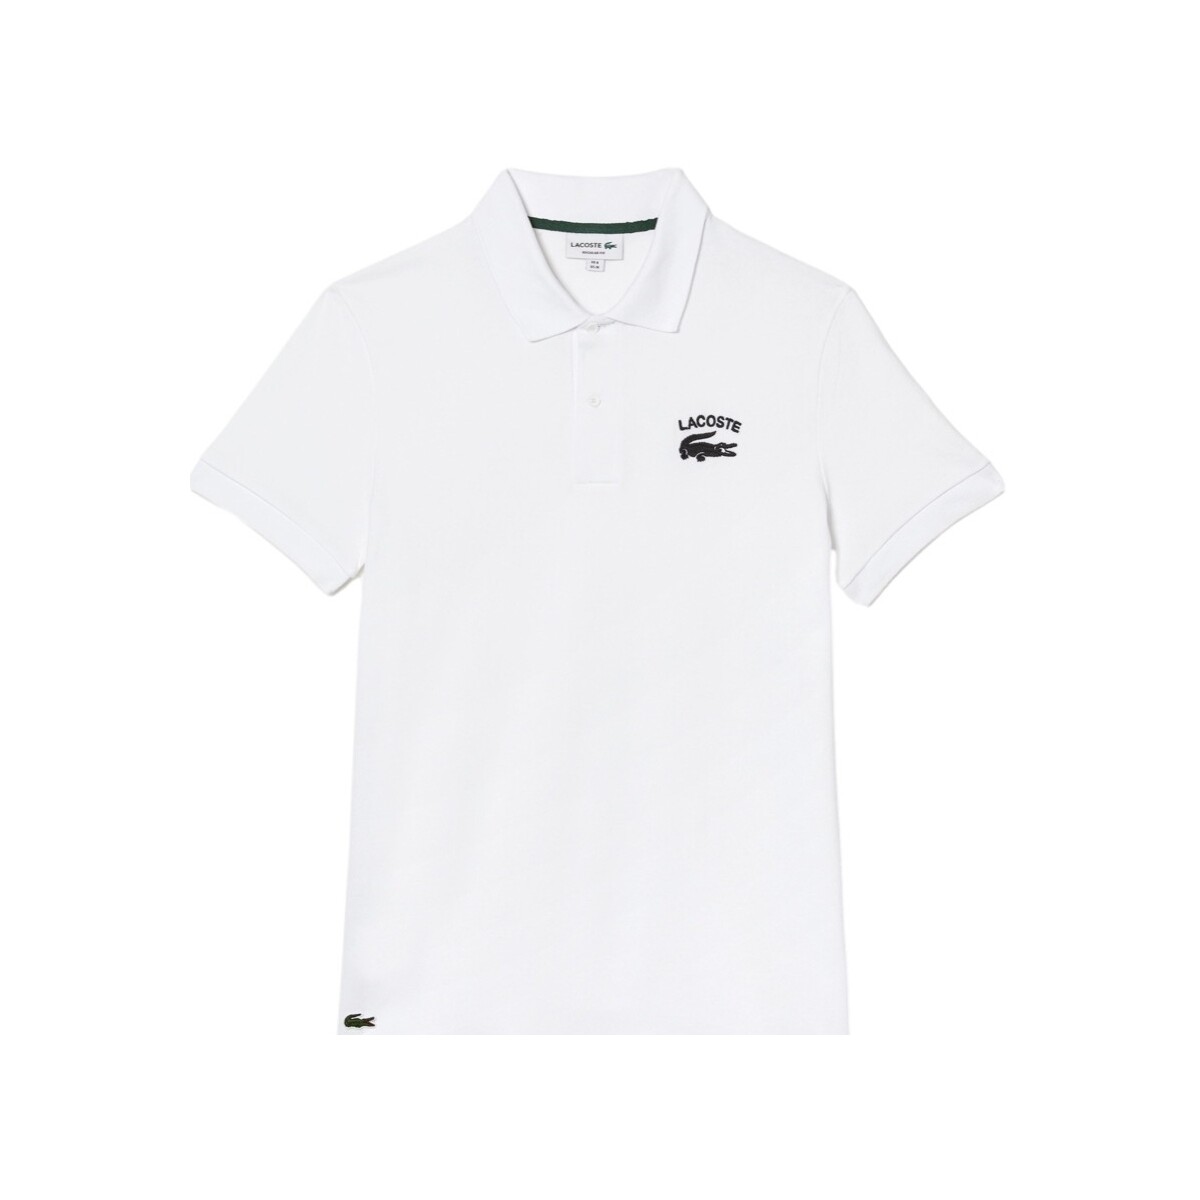 Îmbracaminte Bărbați Tricouri & Tricouri Polo Lacoste Stretch Mini Piqué Polo Shirt - Blanc Alb